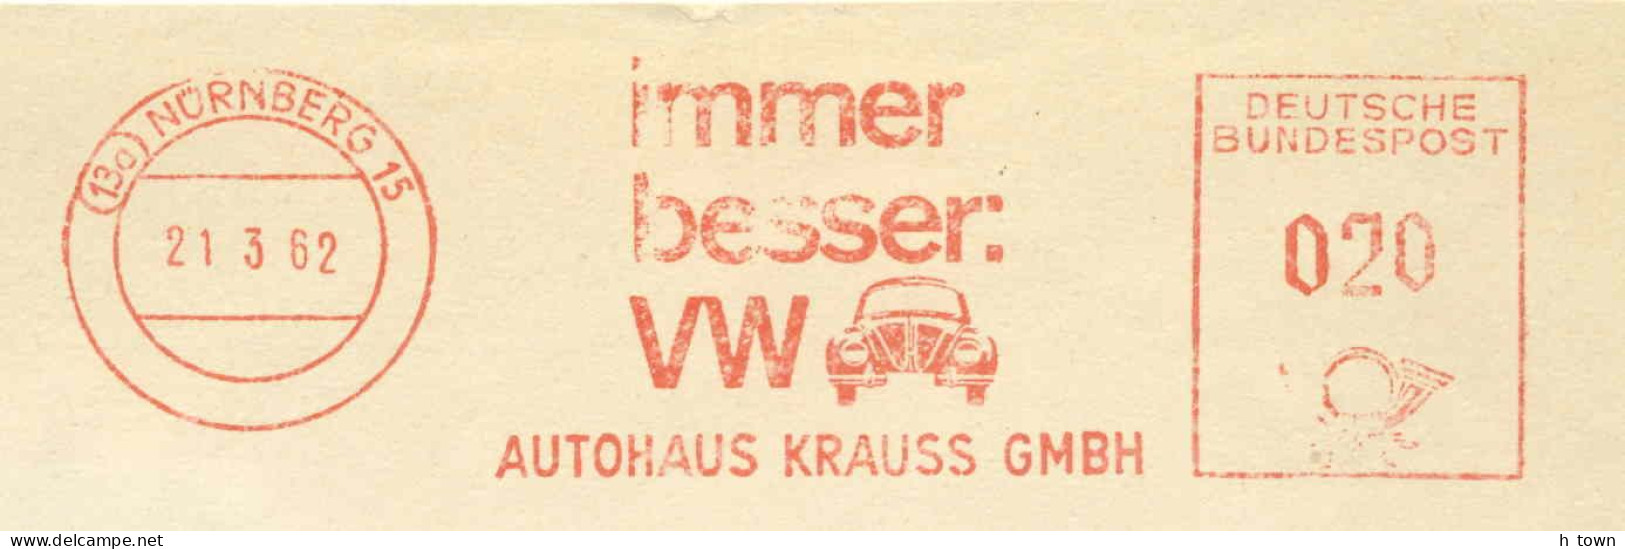 226  VW Coccinelle: Ema 1962 - Volkswagen Beetle On Meter Stamp From Nürnberg, Germany - Voitures